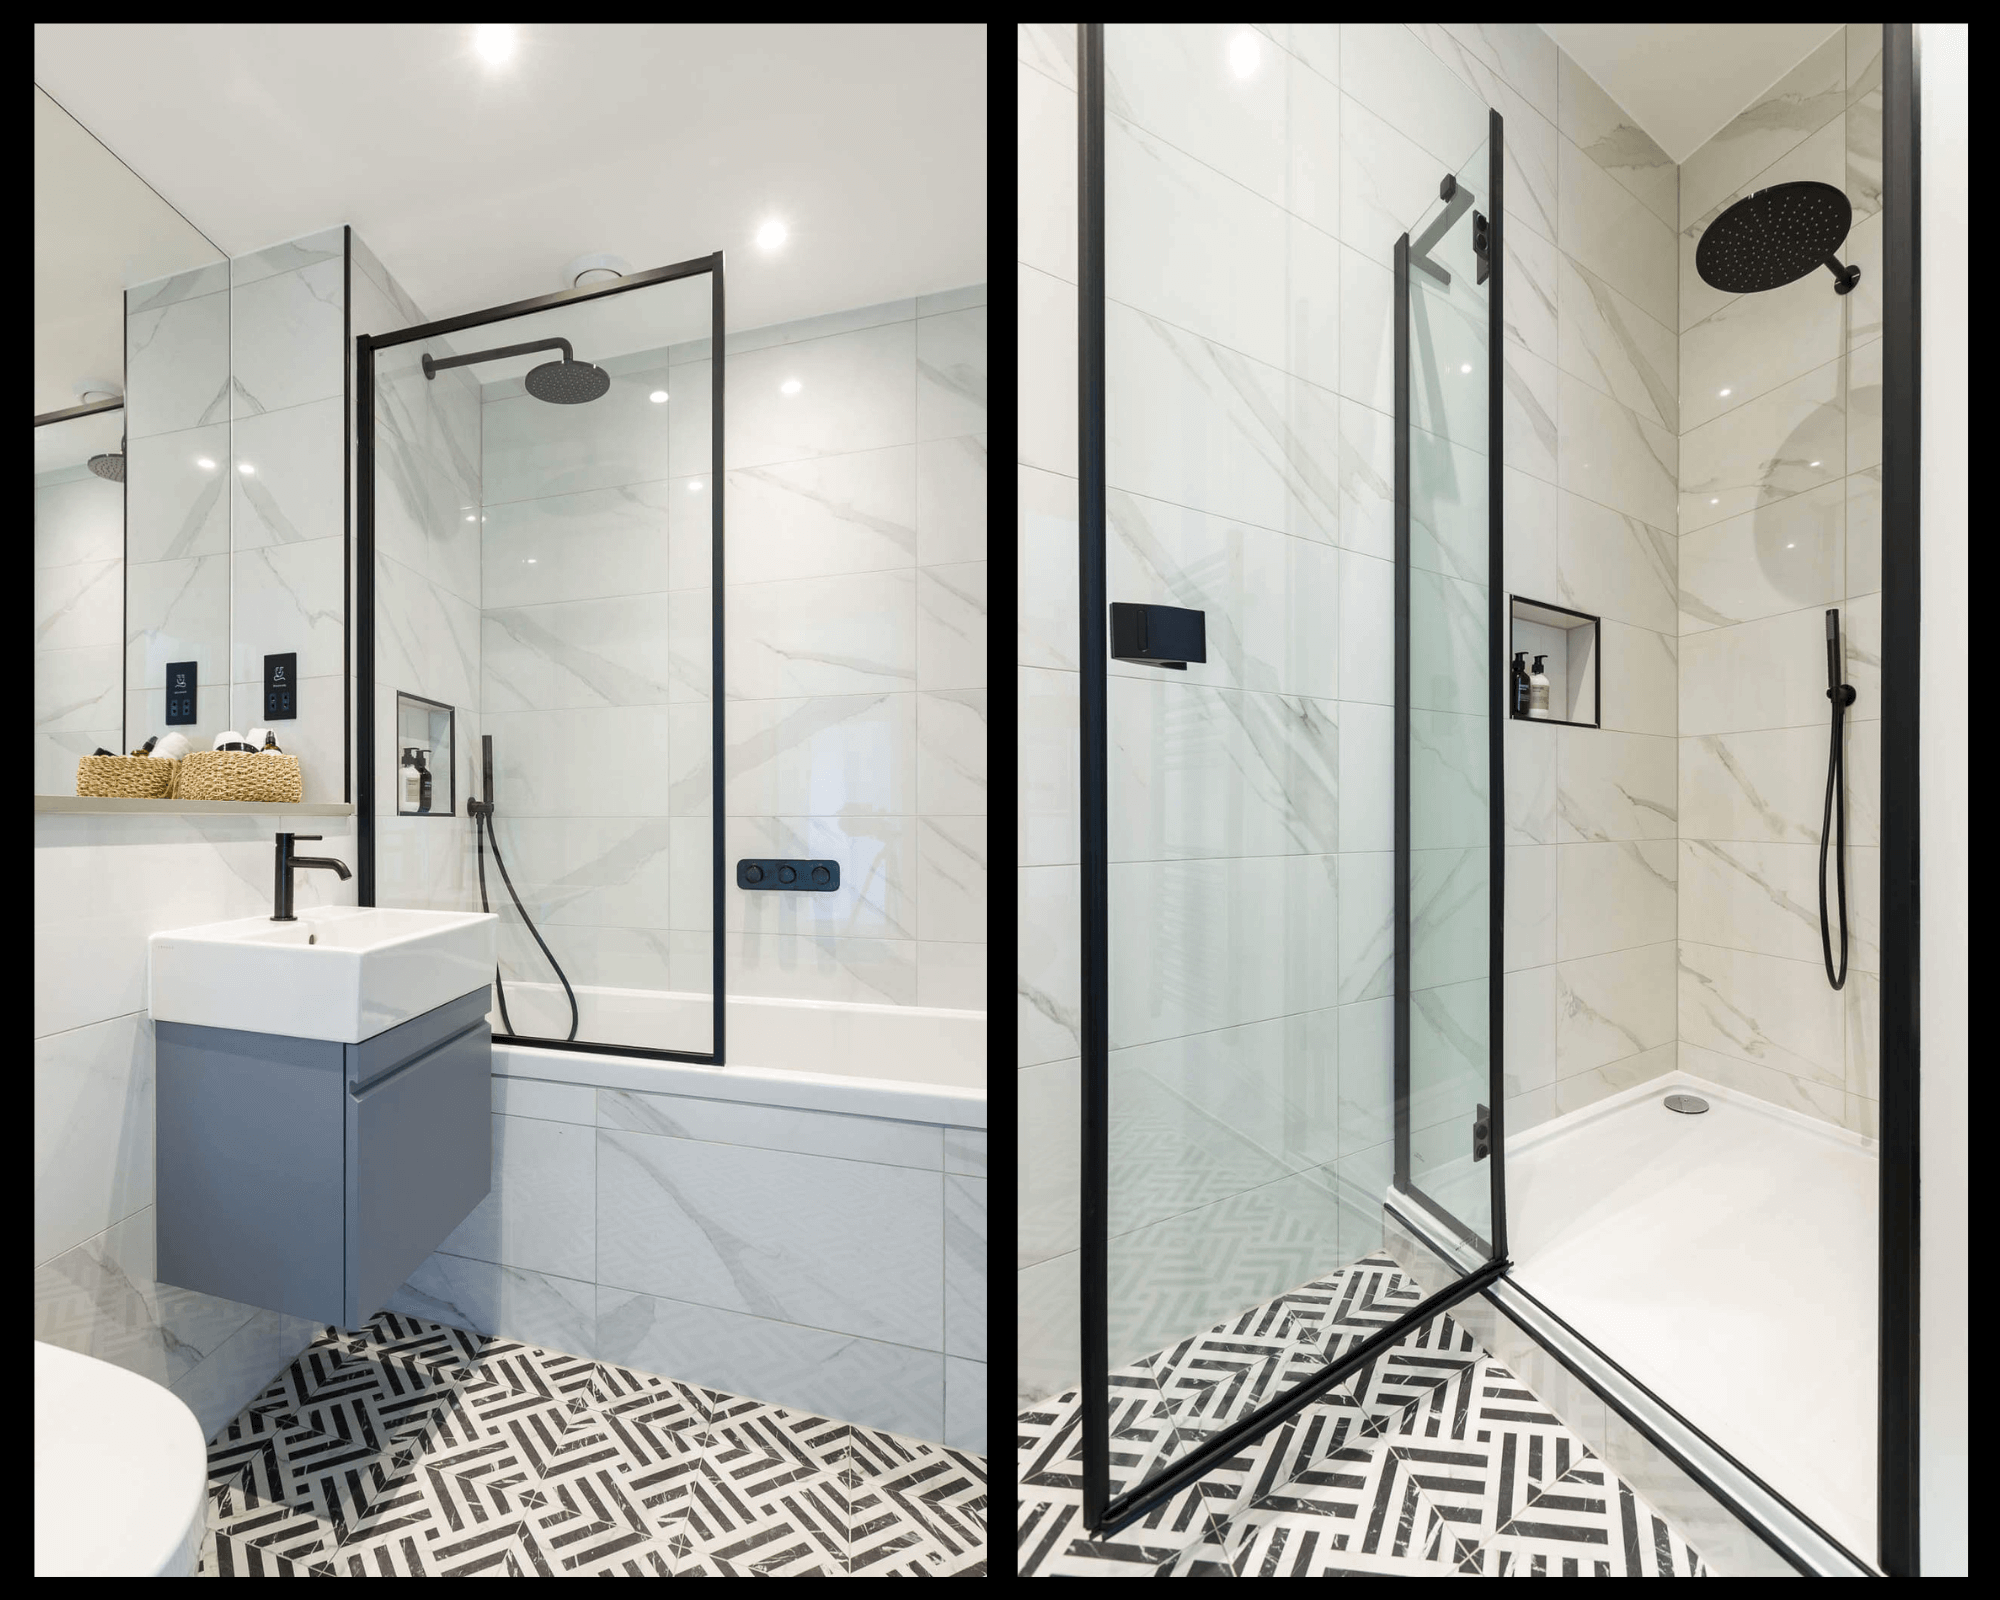 Bathroom in Irene House, London. Designed by Jigsaw, specified by Big Bath Company.